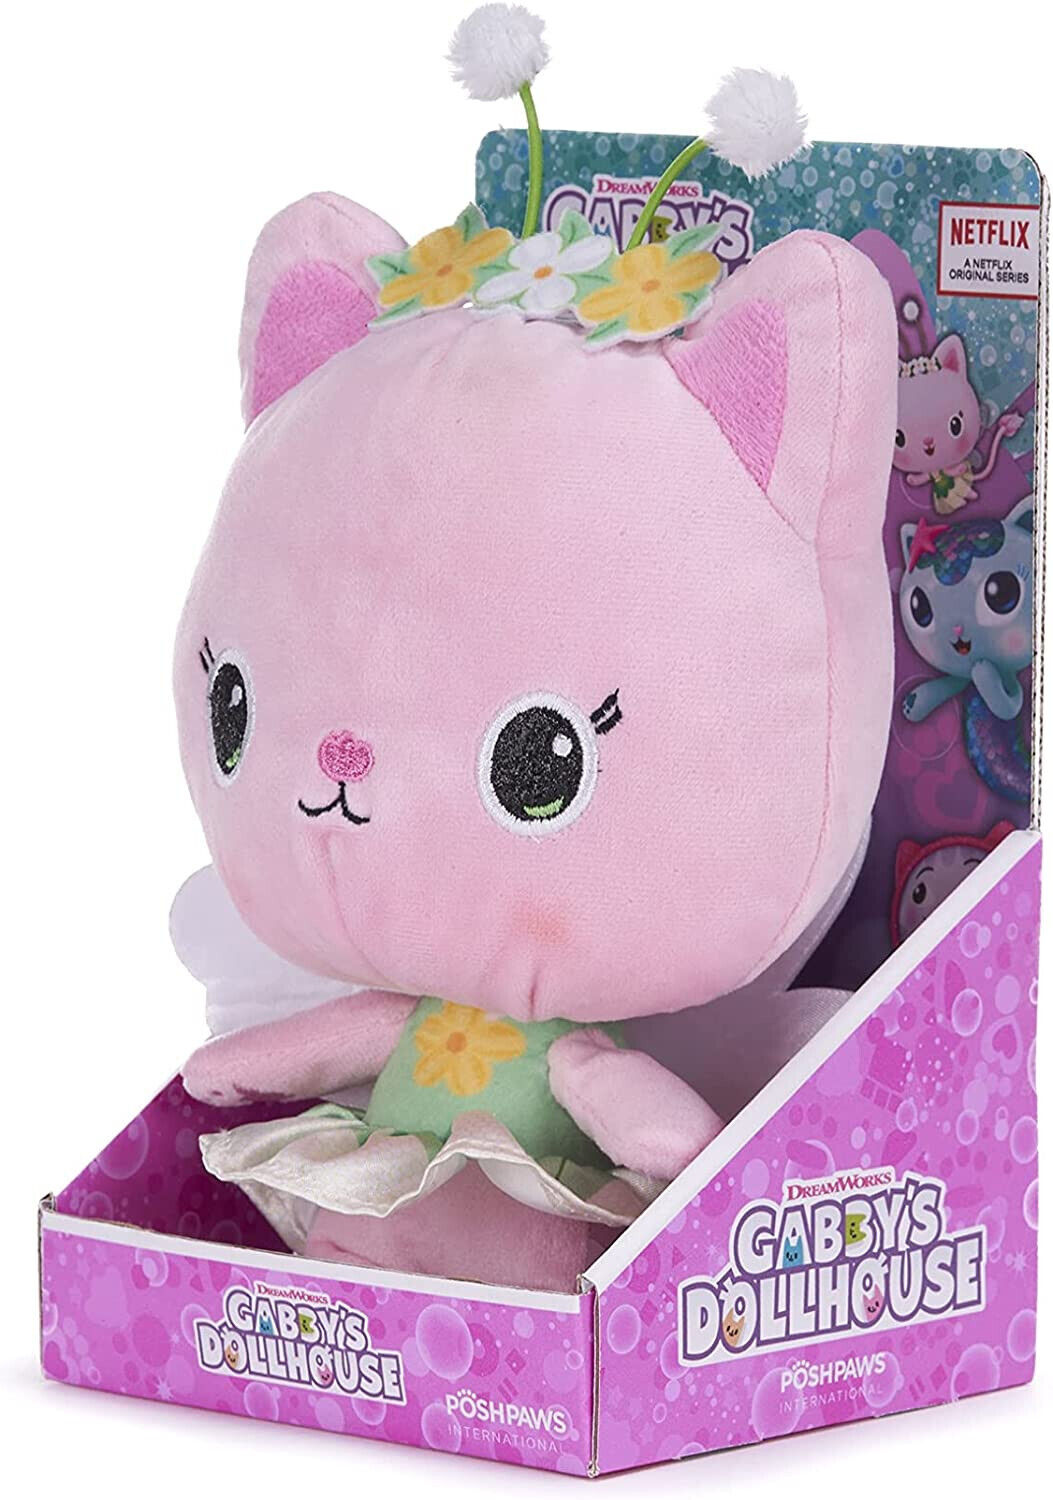 Posh Paws Gabby's Dollhouse 25cm Kitty Fairy Plush Toy - NEW